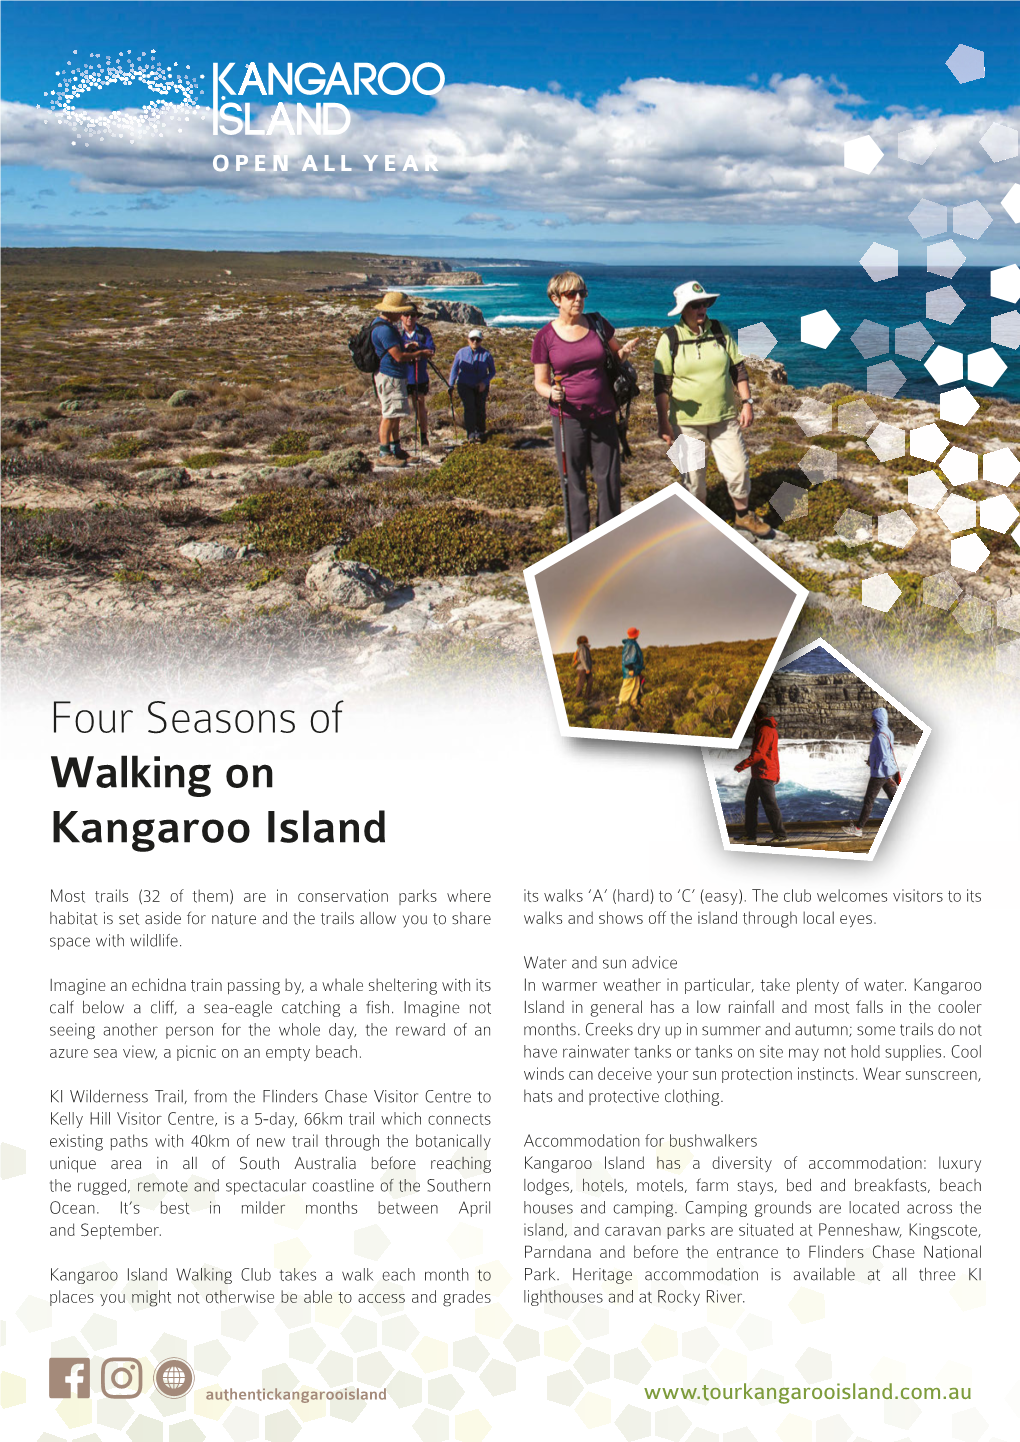 Walking Four Seasons on Kangaroo Island